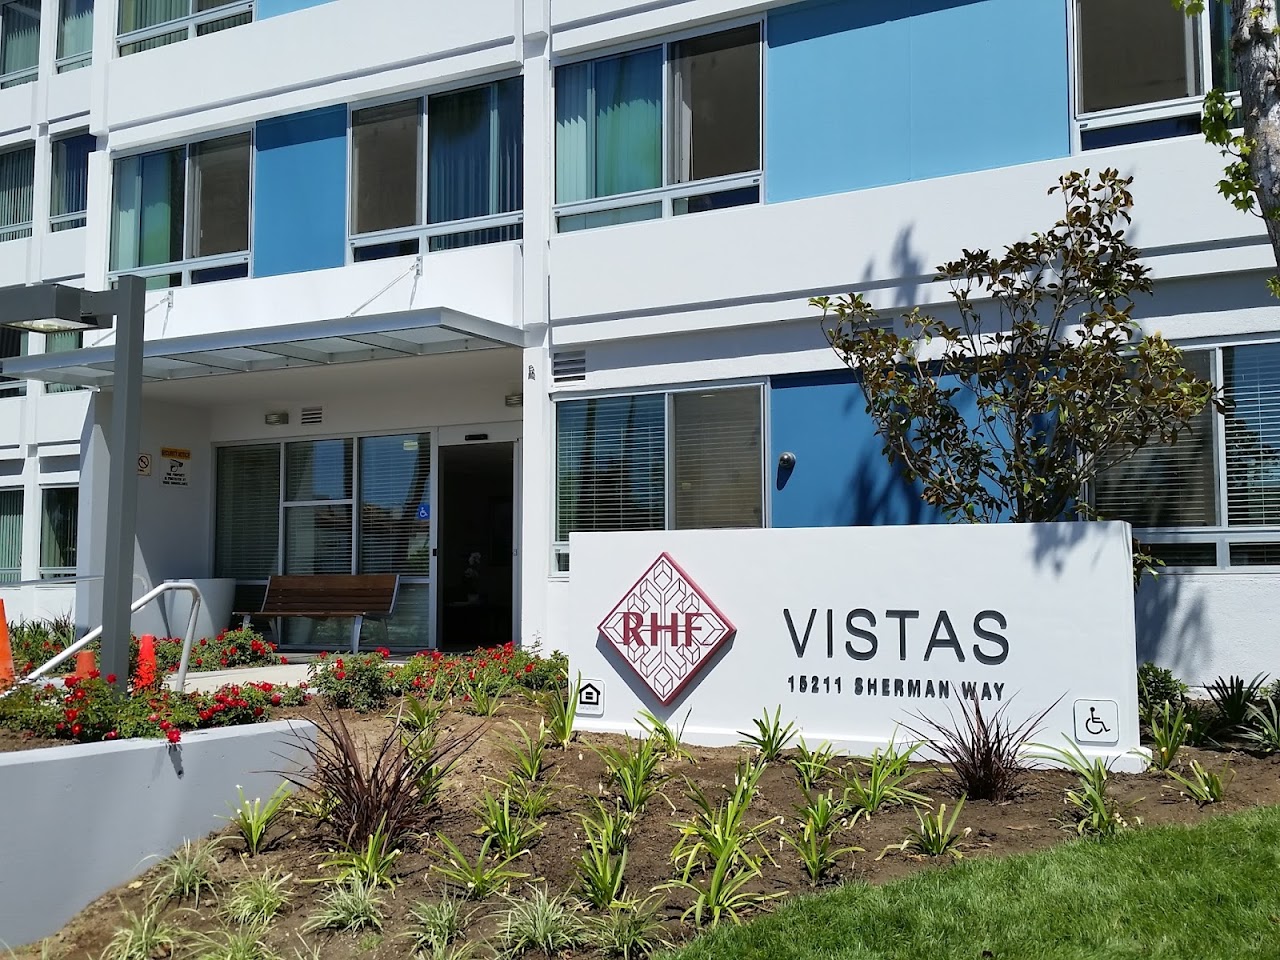 Photo of VISTAS. Affordable housing located at 15211 SHERMAN WAY VAN NUYS, CA 91405